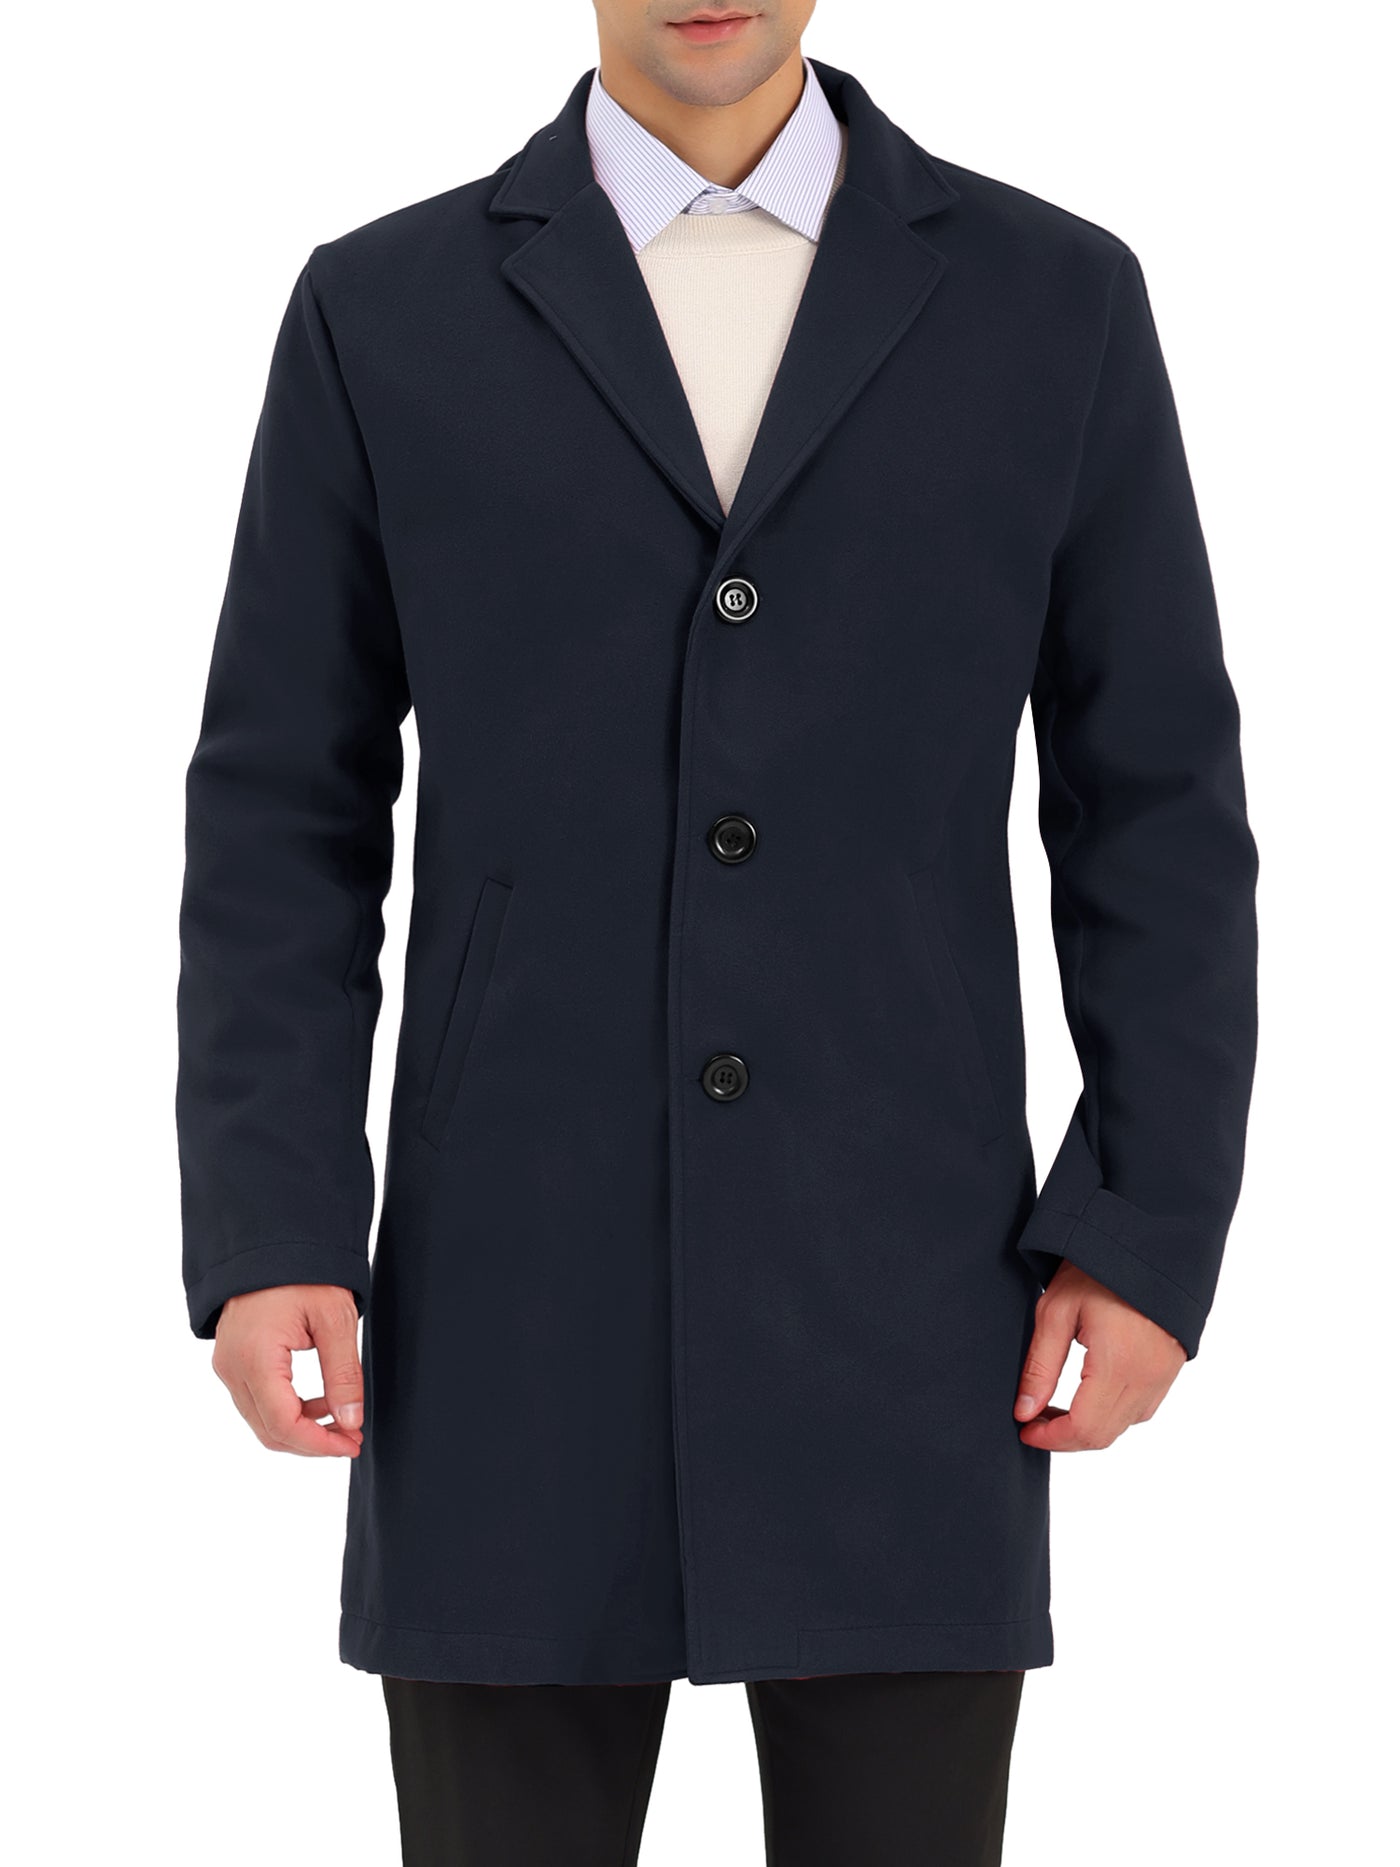 Bublédon Men's Trench Coat Lapel Collar Single Breasted Warm Long Peacoat Overcoat